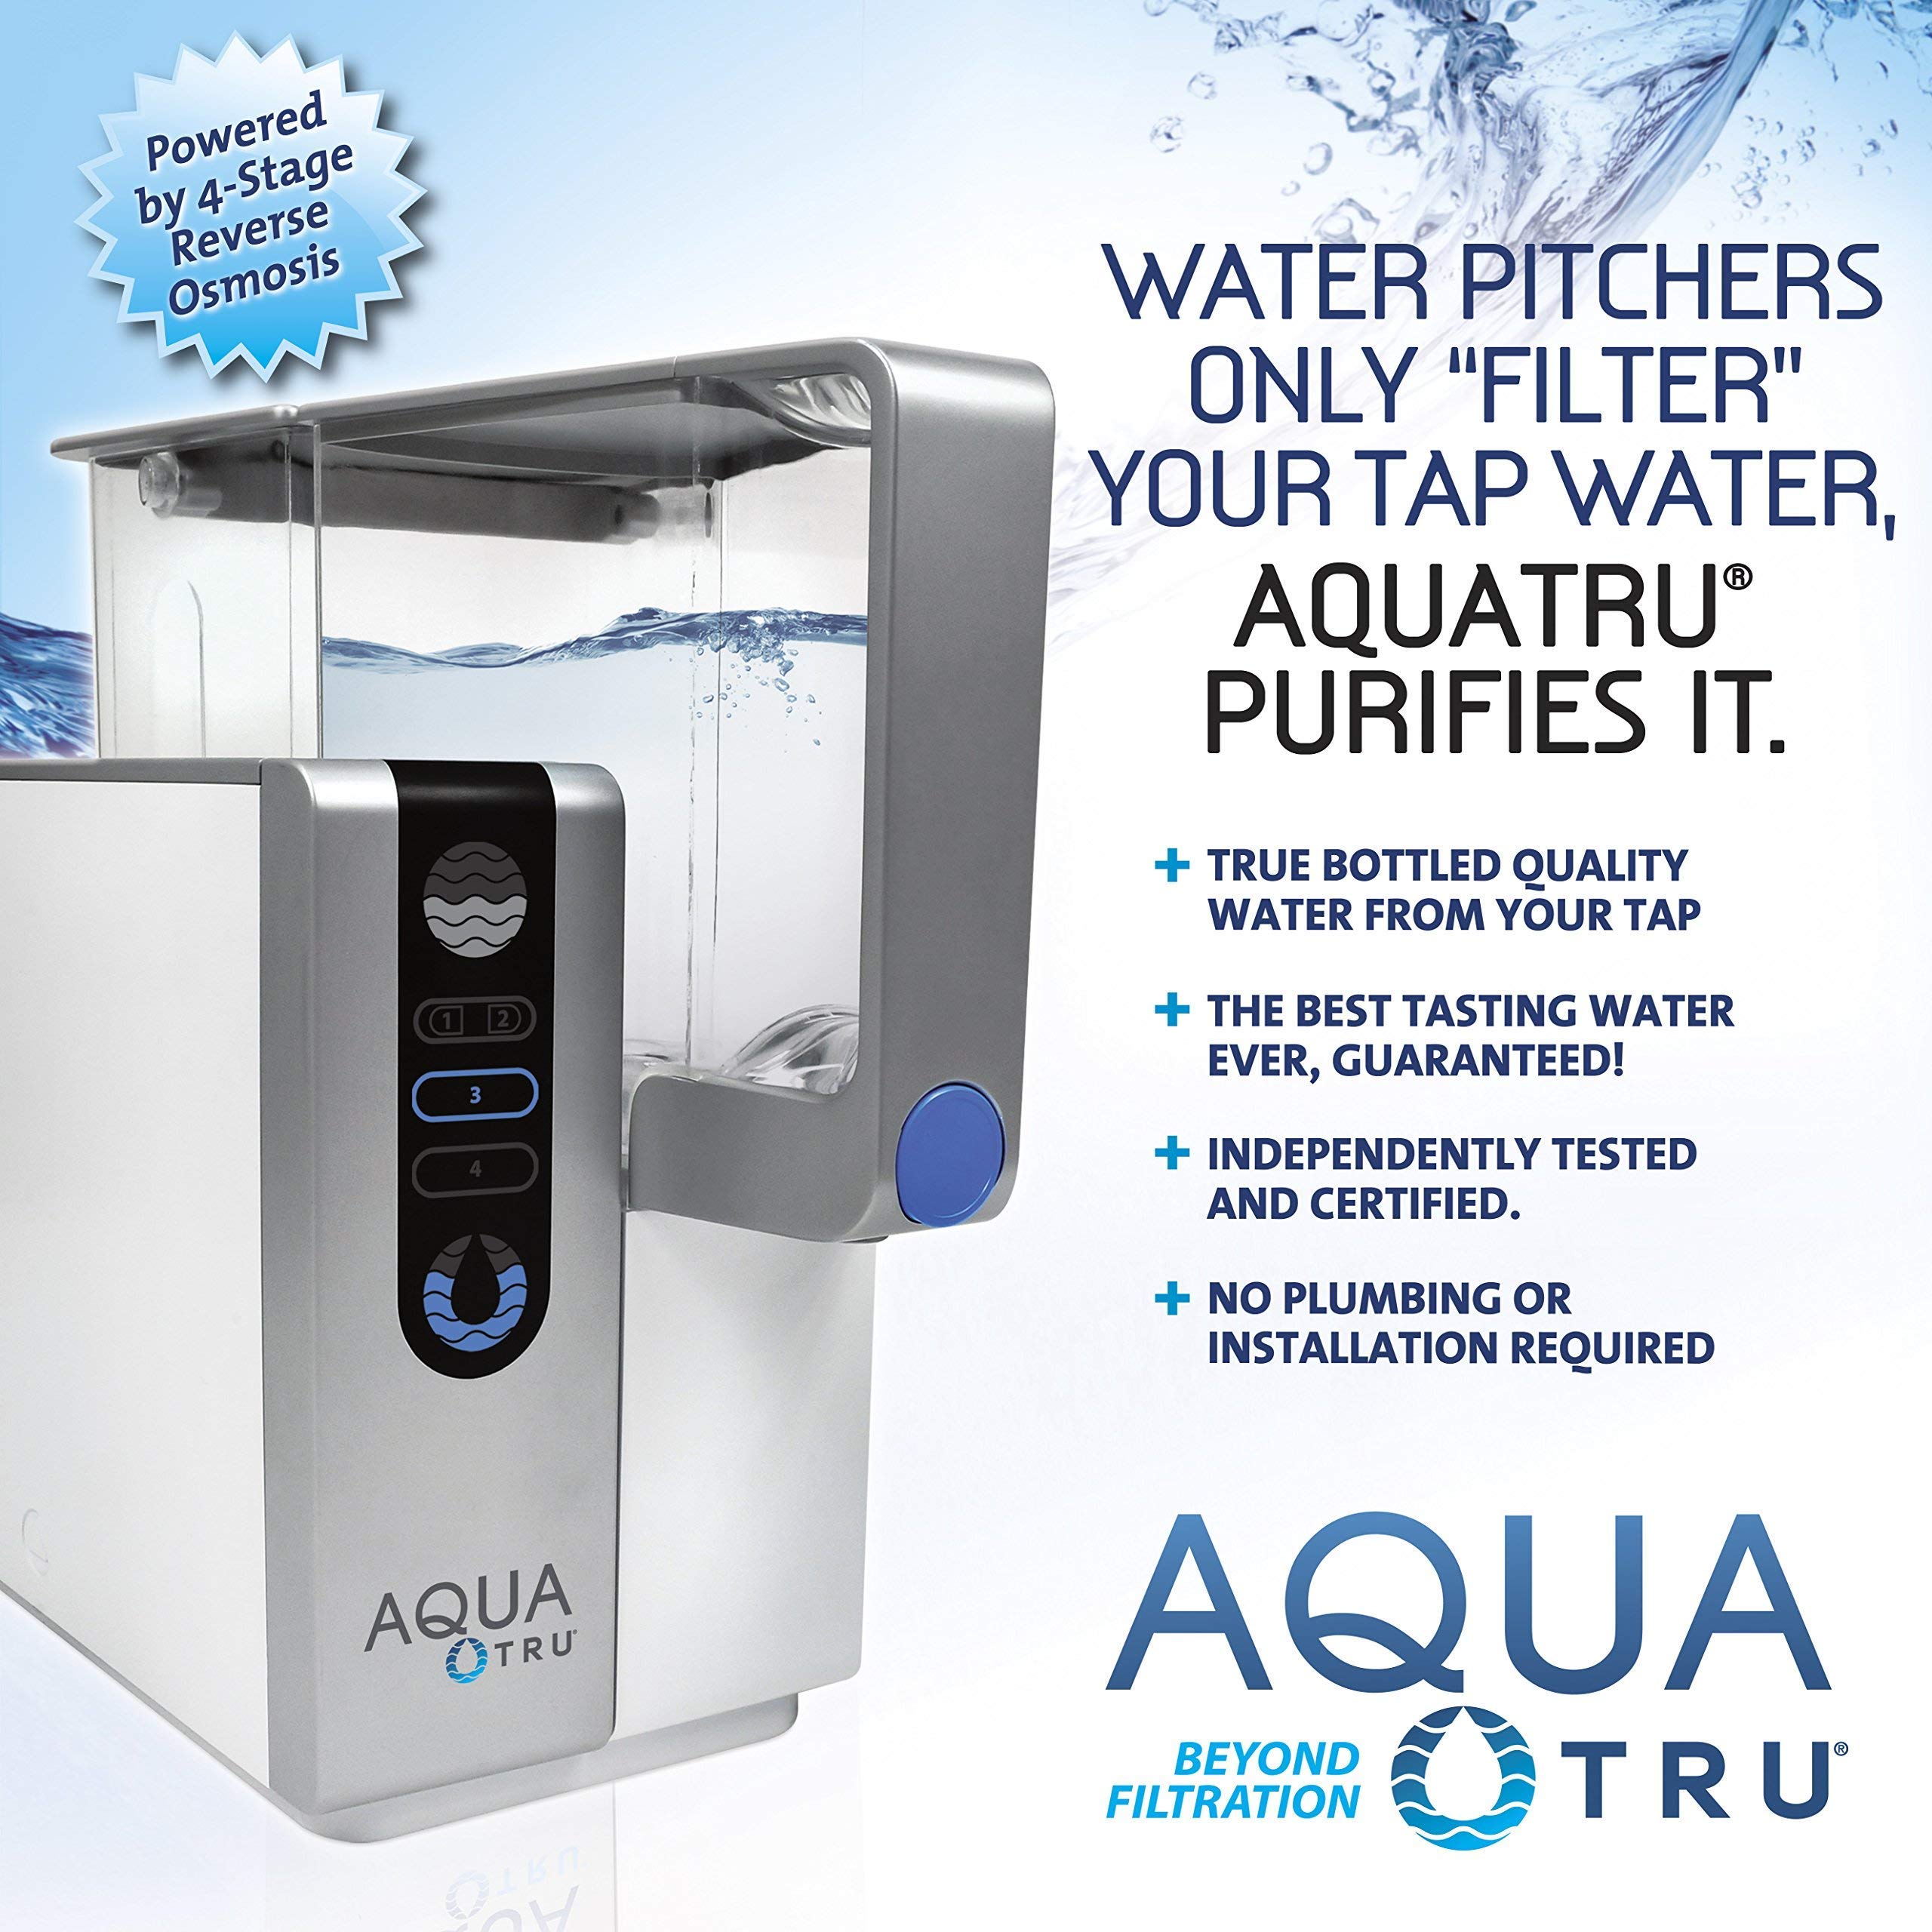 Aqua Tru Countertop Reverse Osmosis Water Purifier Review - Easy to Use! 